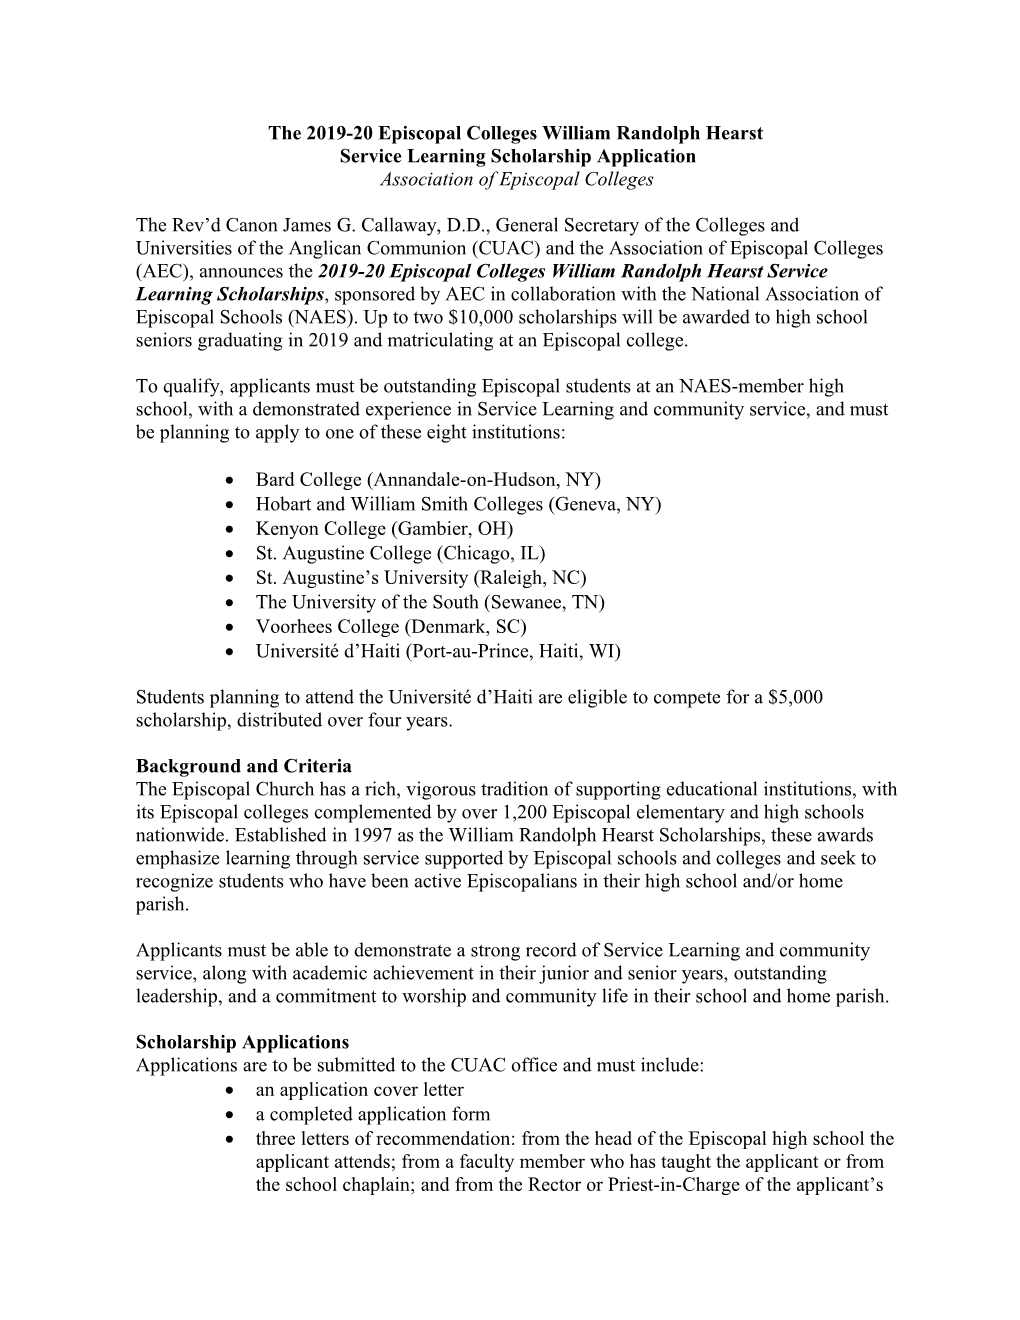 2014-15 William Randolph Hearst Service Learning Scholarship Application